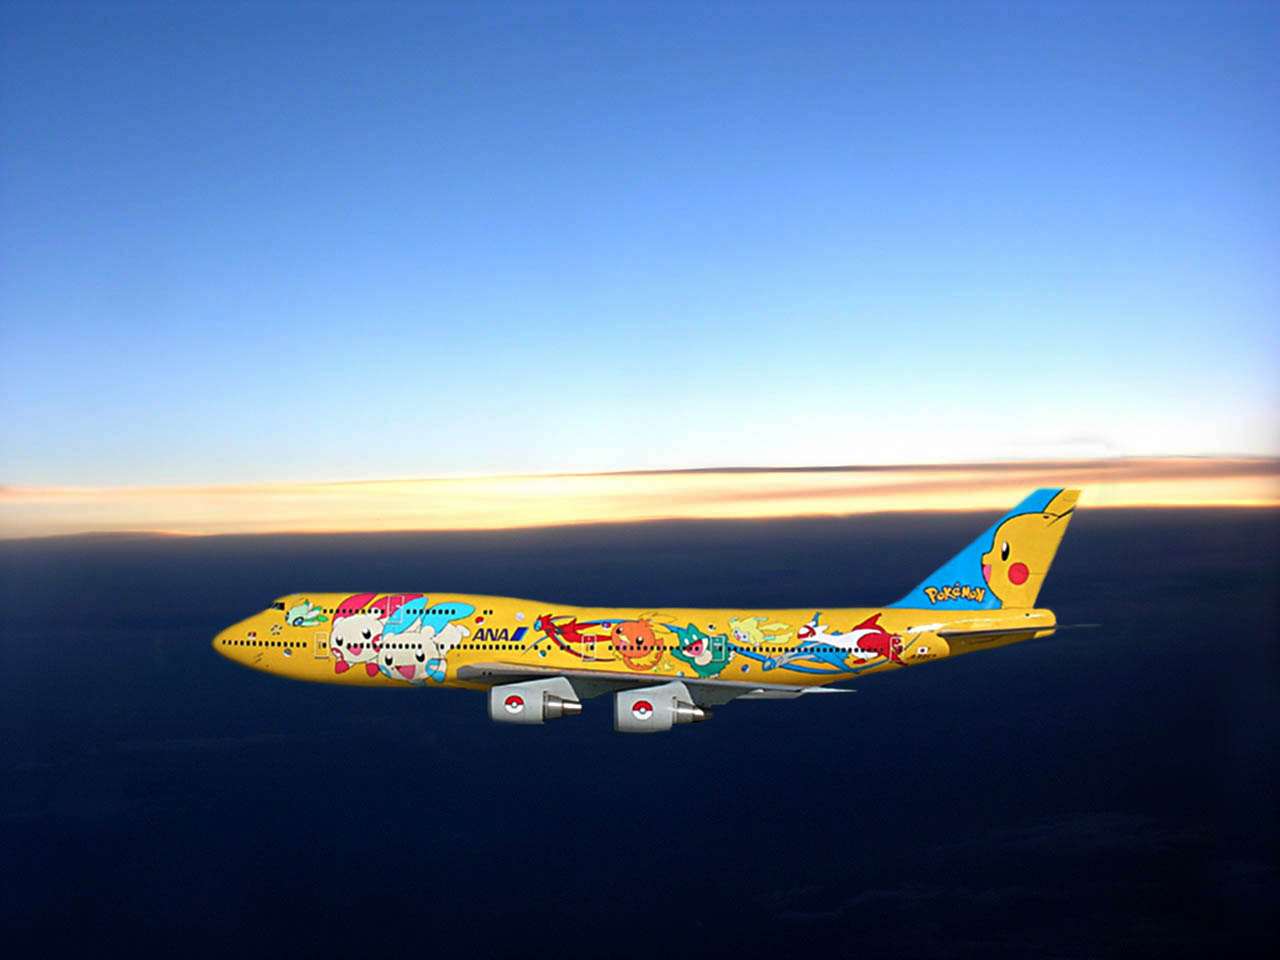 hd wallpaper airplanes full hd wallpaper airplanes full hd wallpaper ...